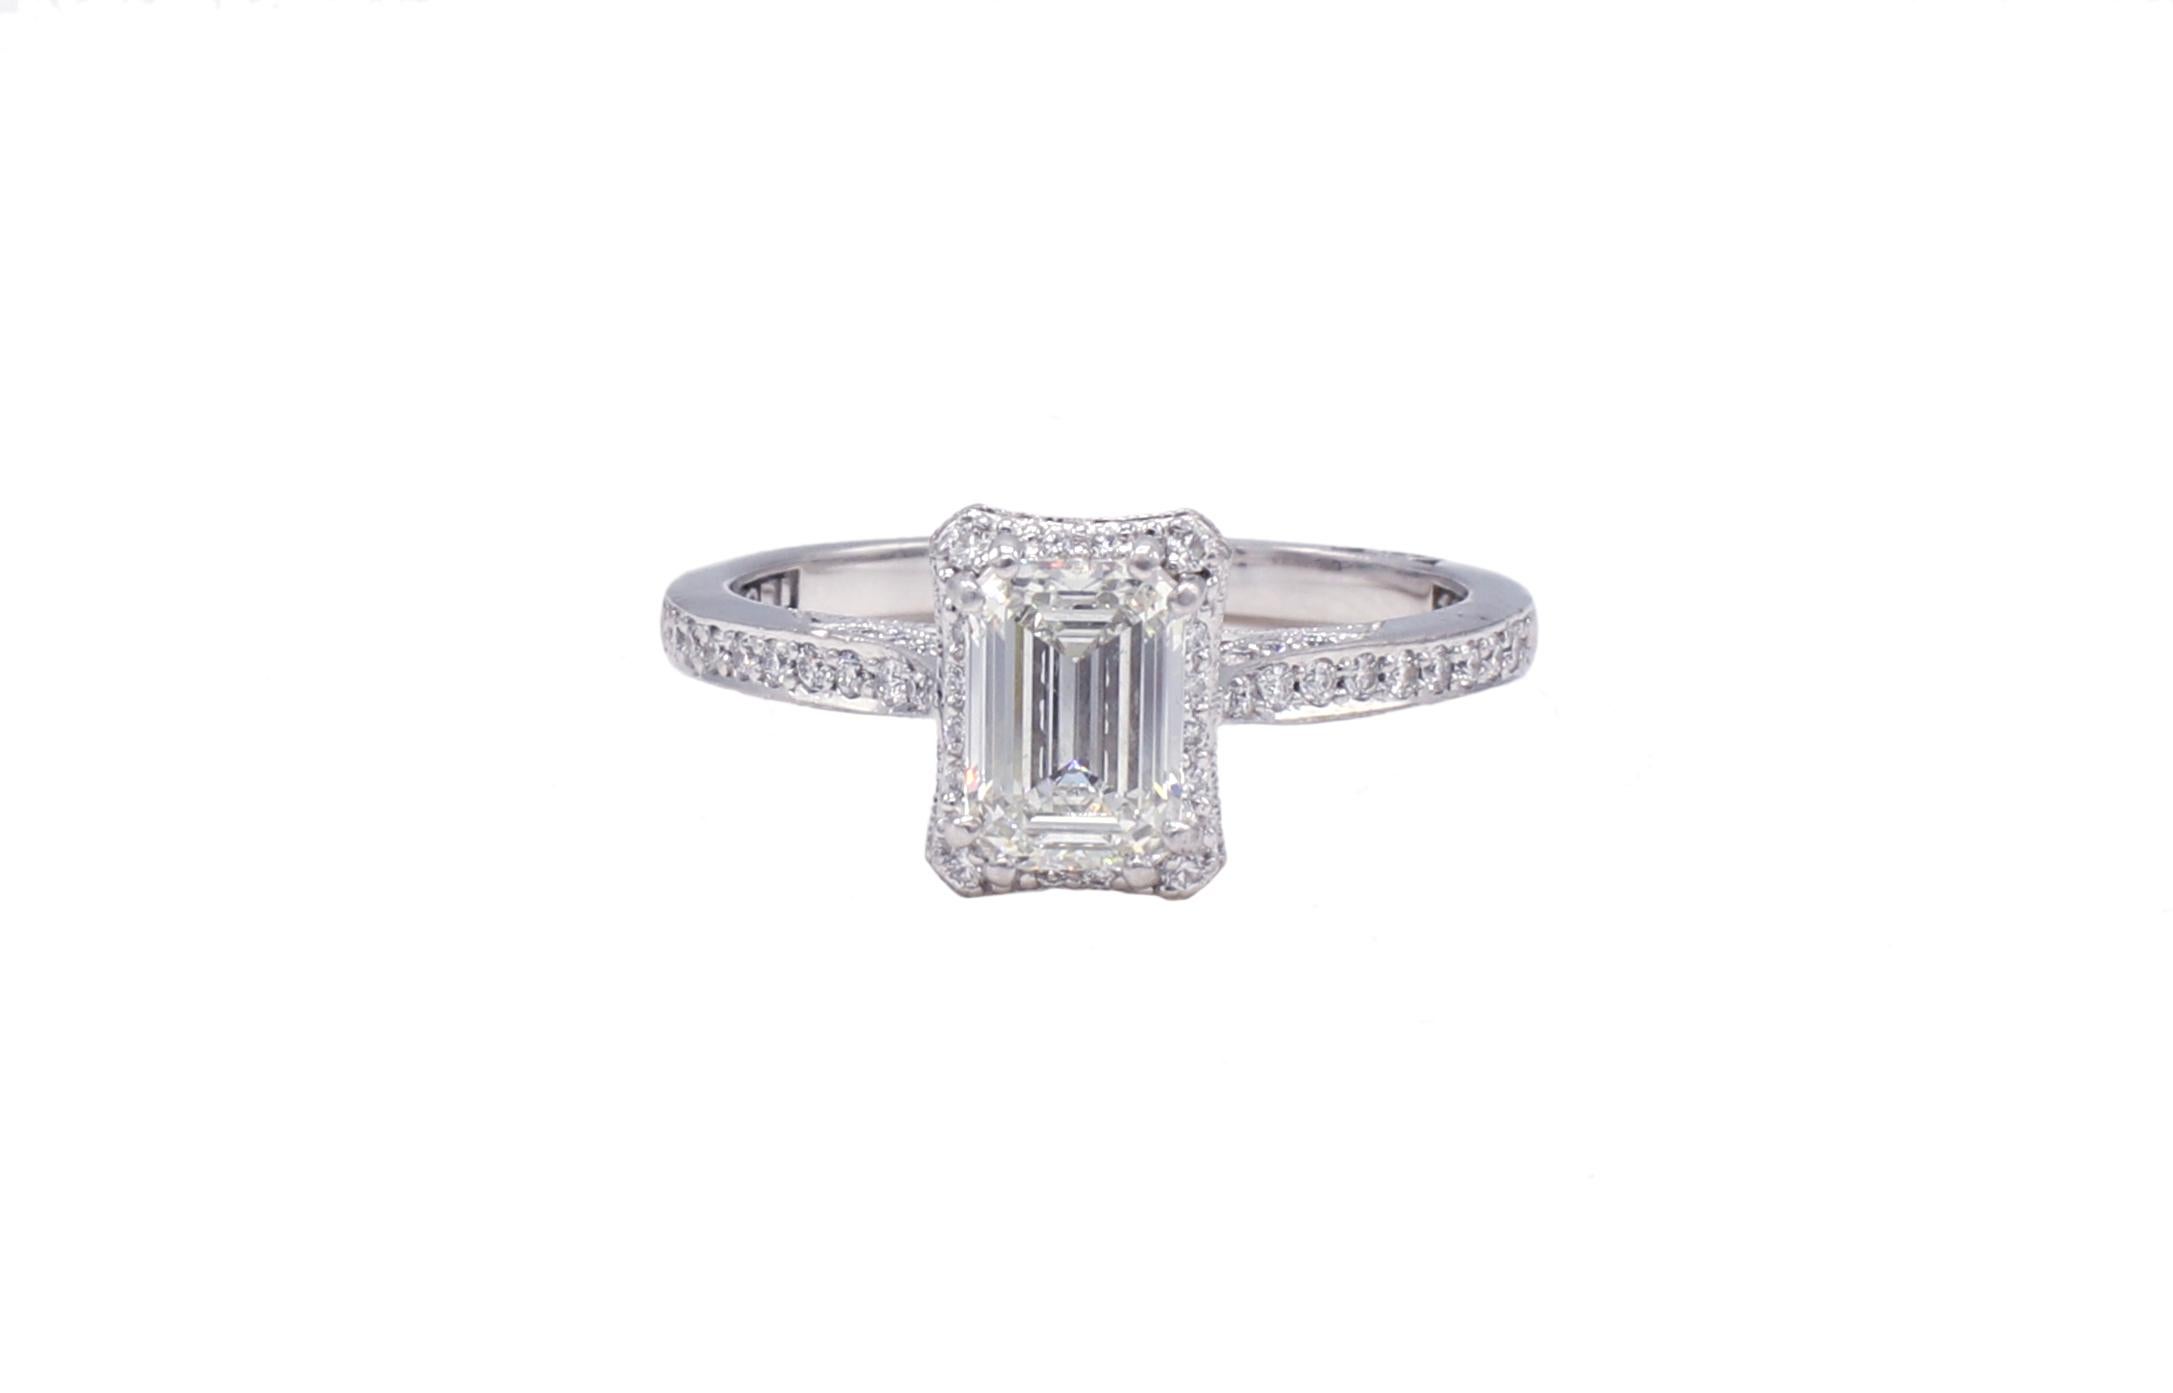 GIA Certified Tacori Emerald Cut 1.18 Carat I SI1 Diamond 18 Karat White Gold Halo Engagement Ring

GIA report number: 2161414052
Diamond: 1.18 carat emerald cut I SI1
Accent diamonds: Approx. .33 CTW G VS round diamonds
Size: 8 (US)
Top: 9 x